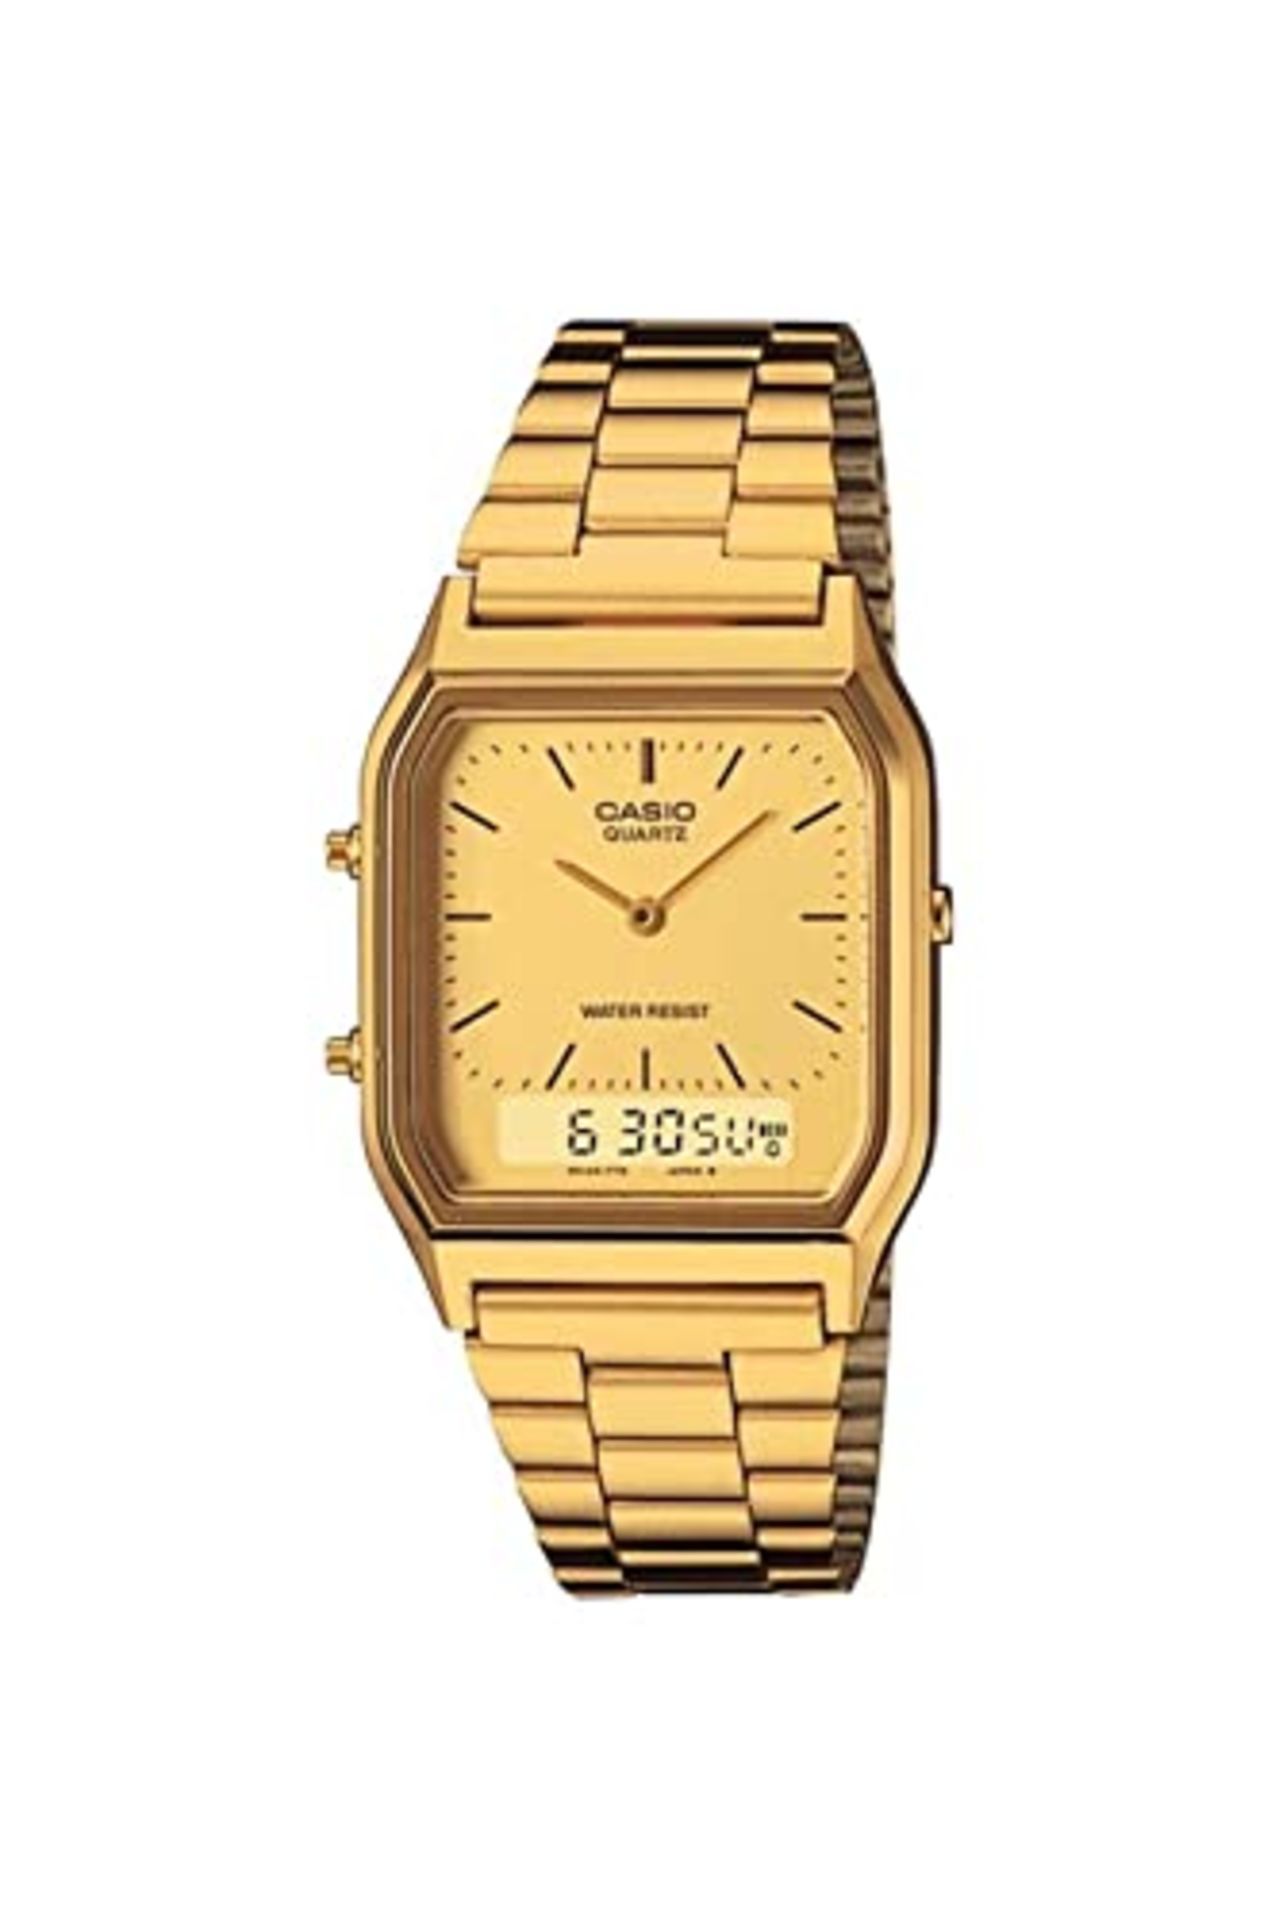 Casio Collection Unisex-Adult's Watch Bracelet AQ-230GA-9DMQYES, Gold